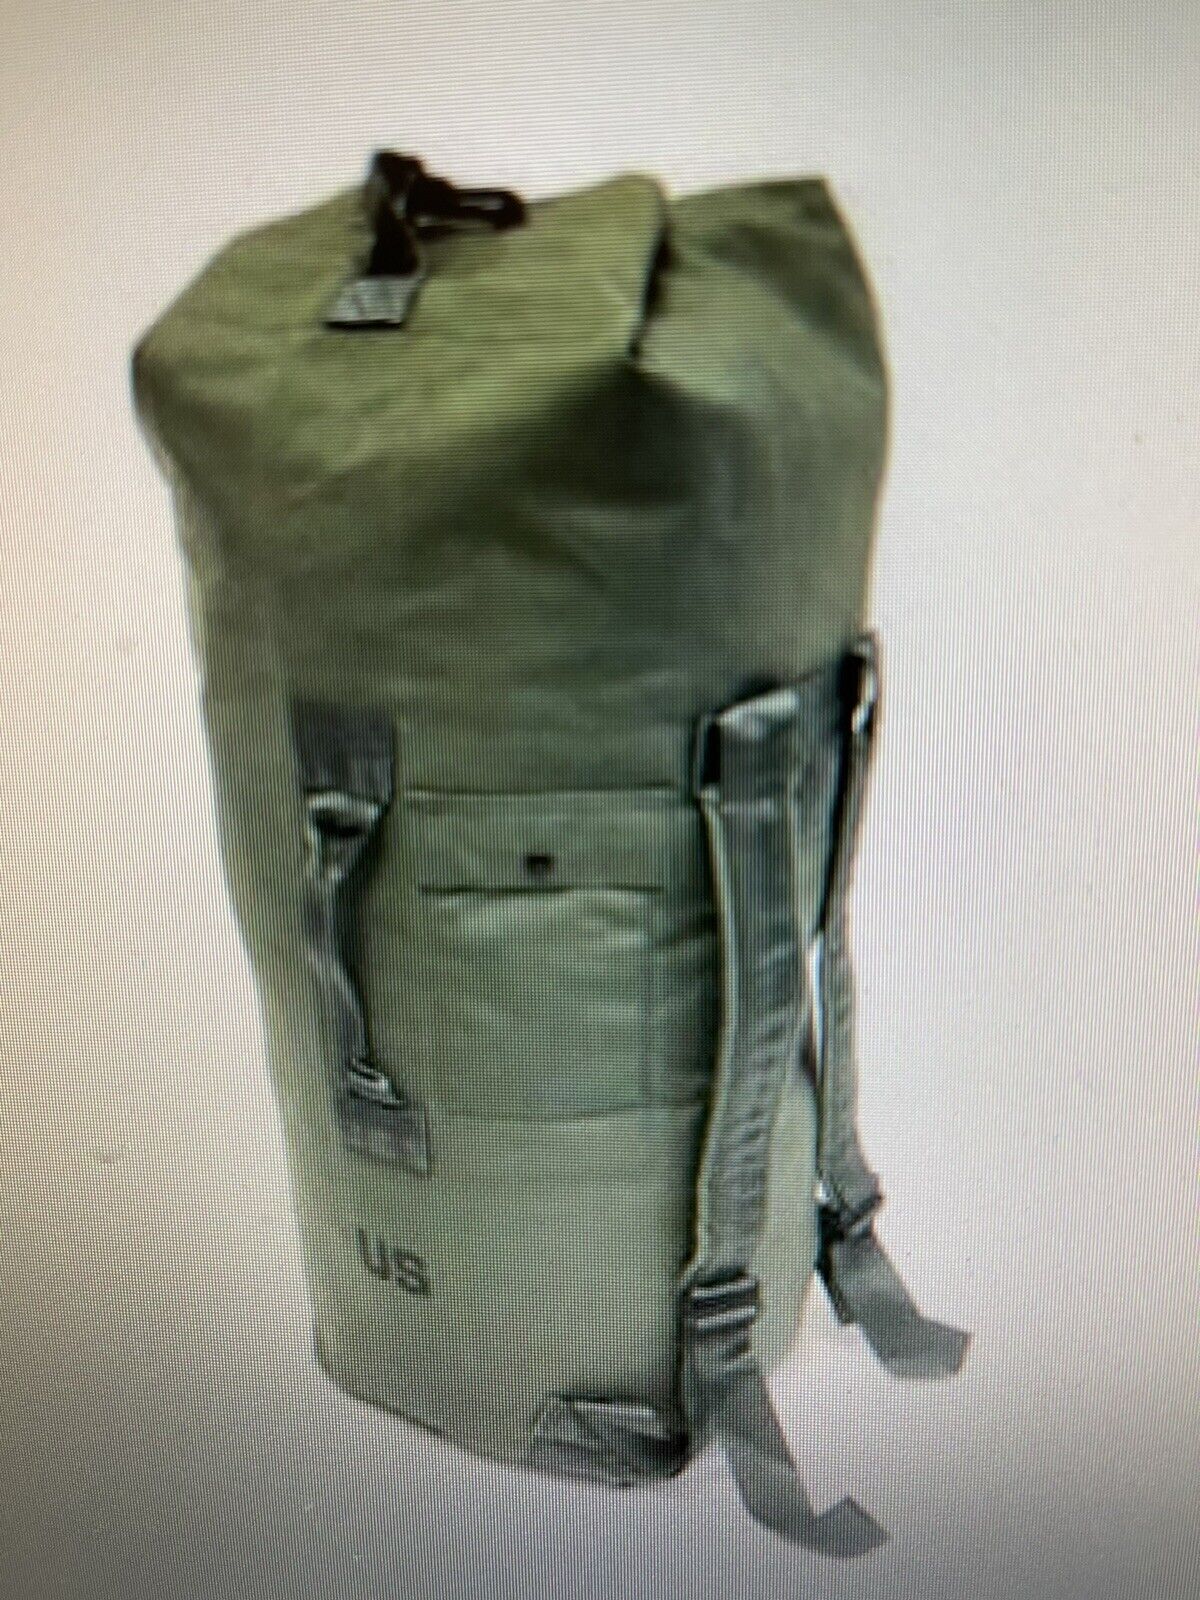 US Military GI Cordura Nylon Duffle bag/Sea Bag/Travel Luggage, NEW.